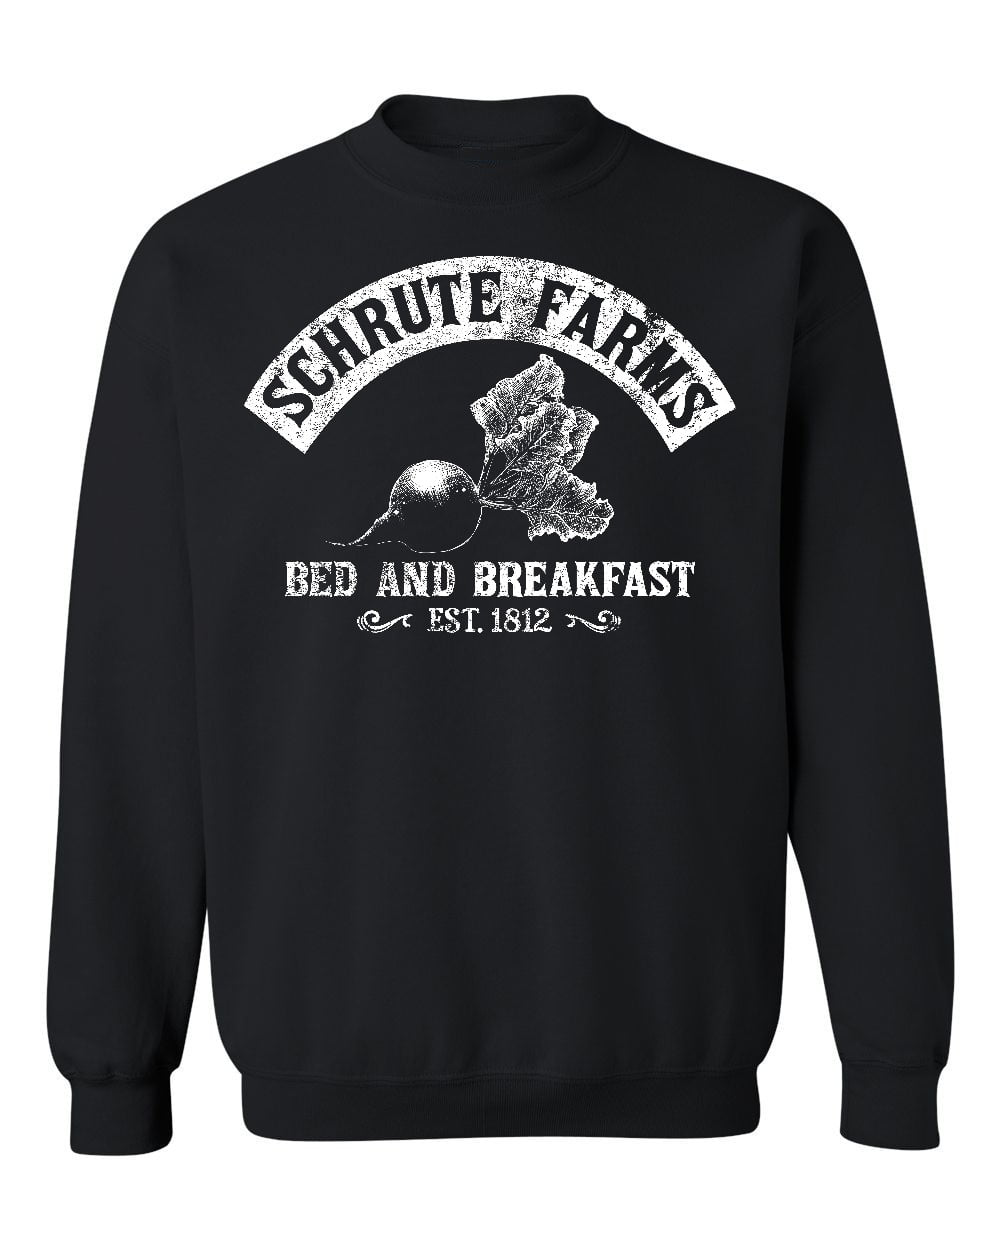 P&B Schrute Farms Beets Bed & Breakfast Funny Crewneck Sweatshirt ...